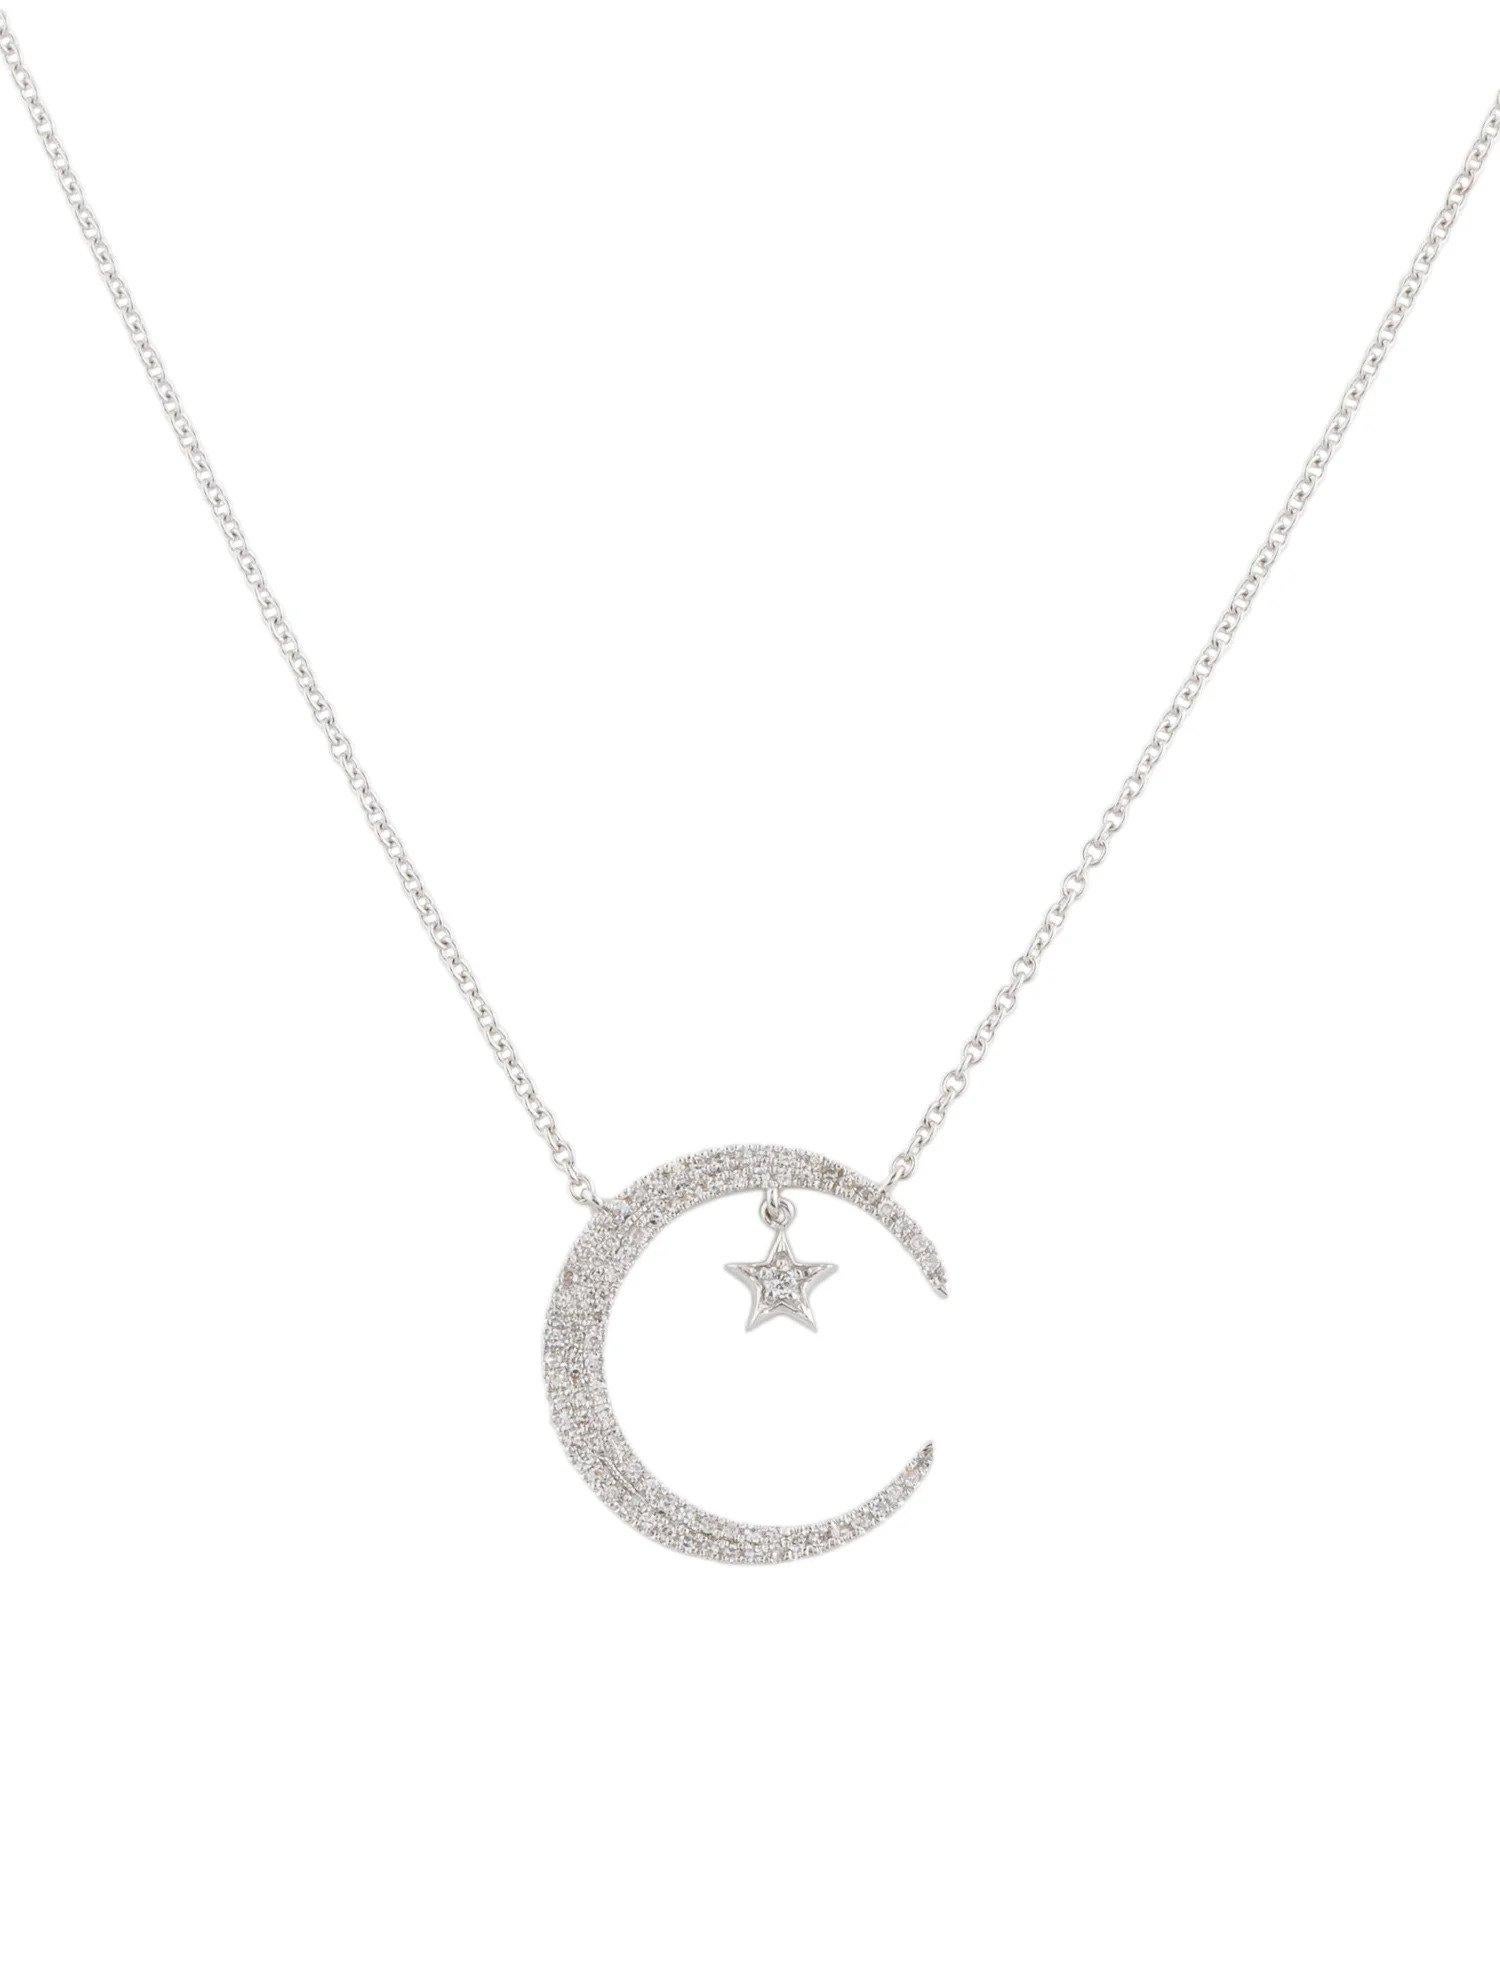 Round Cut 0.25 Carat Diamond Crescent Moon & Star White Gold Pendant Necklace For Sale